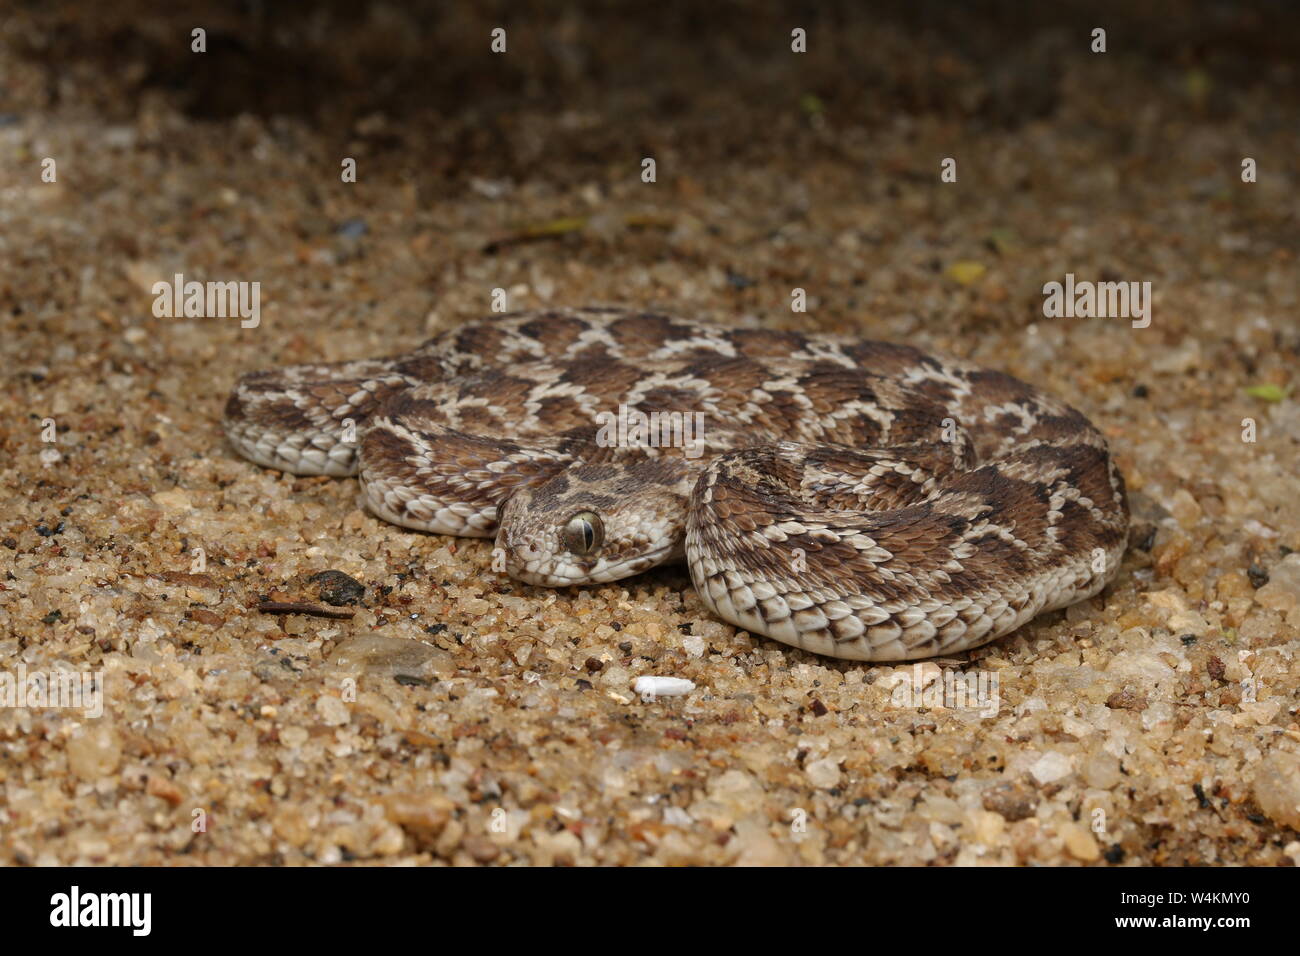 Saw-Scaled Viper, Echis carinatus a venomous snake in Sri Lanka and India  Stock Photo - Alamy